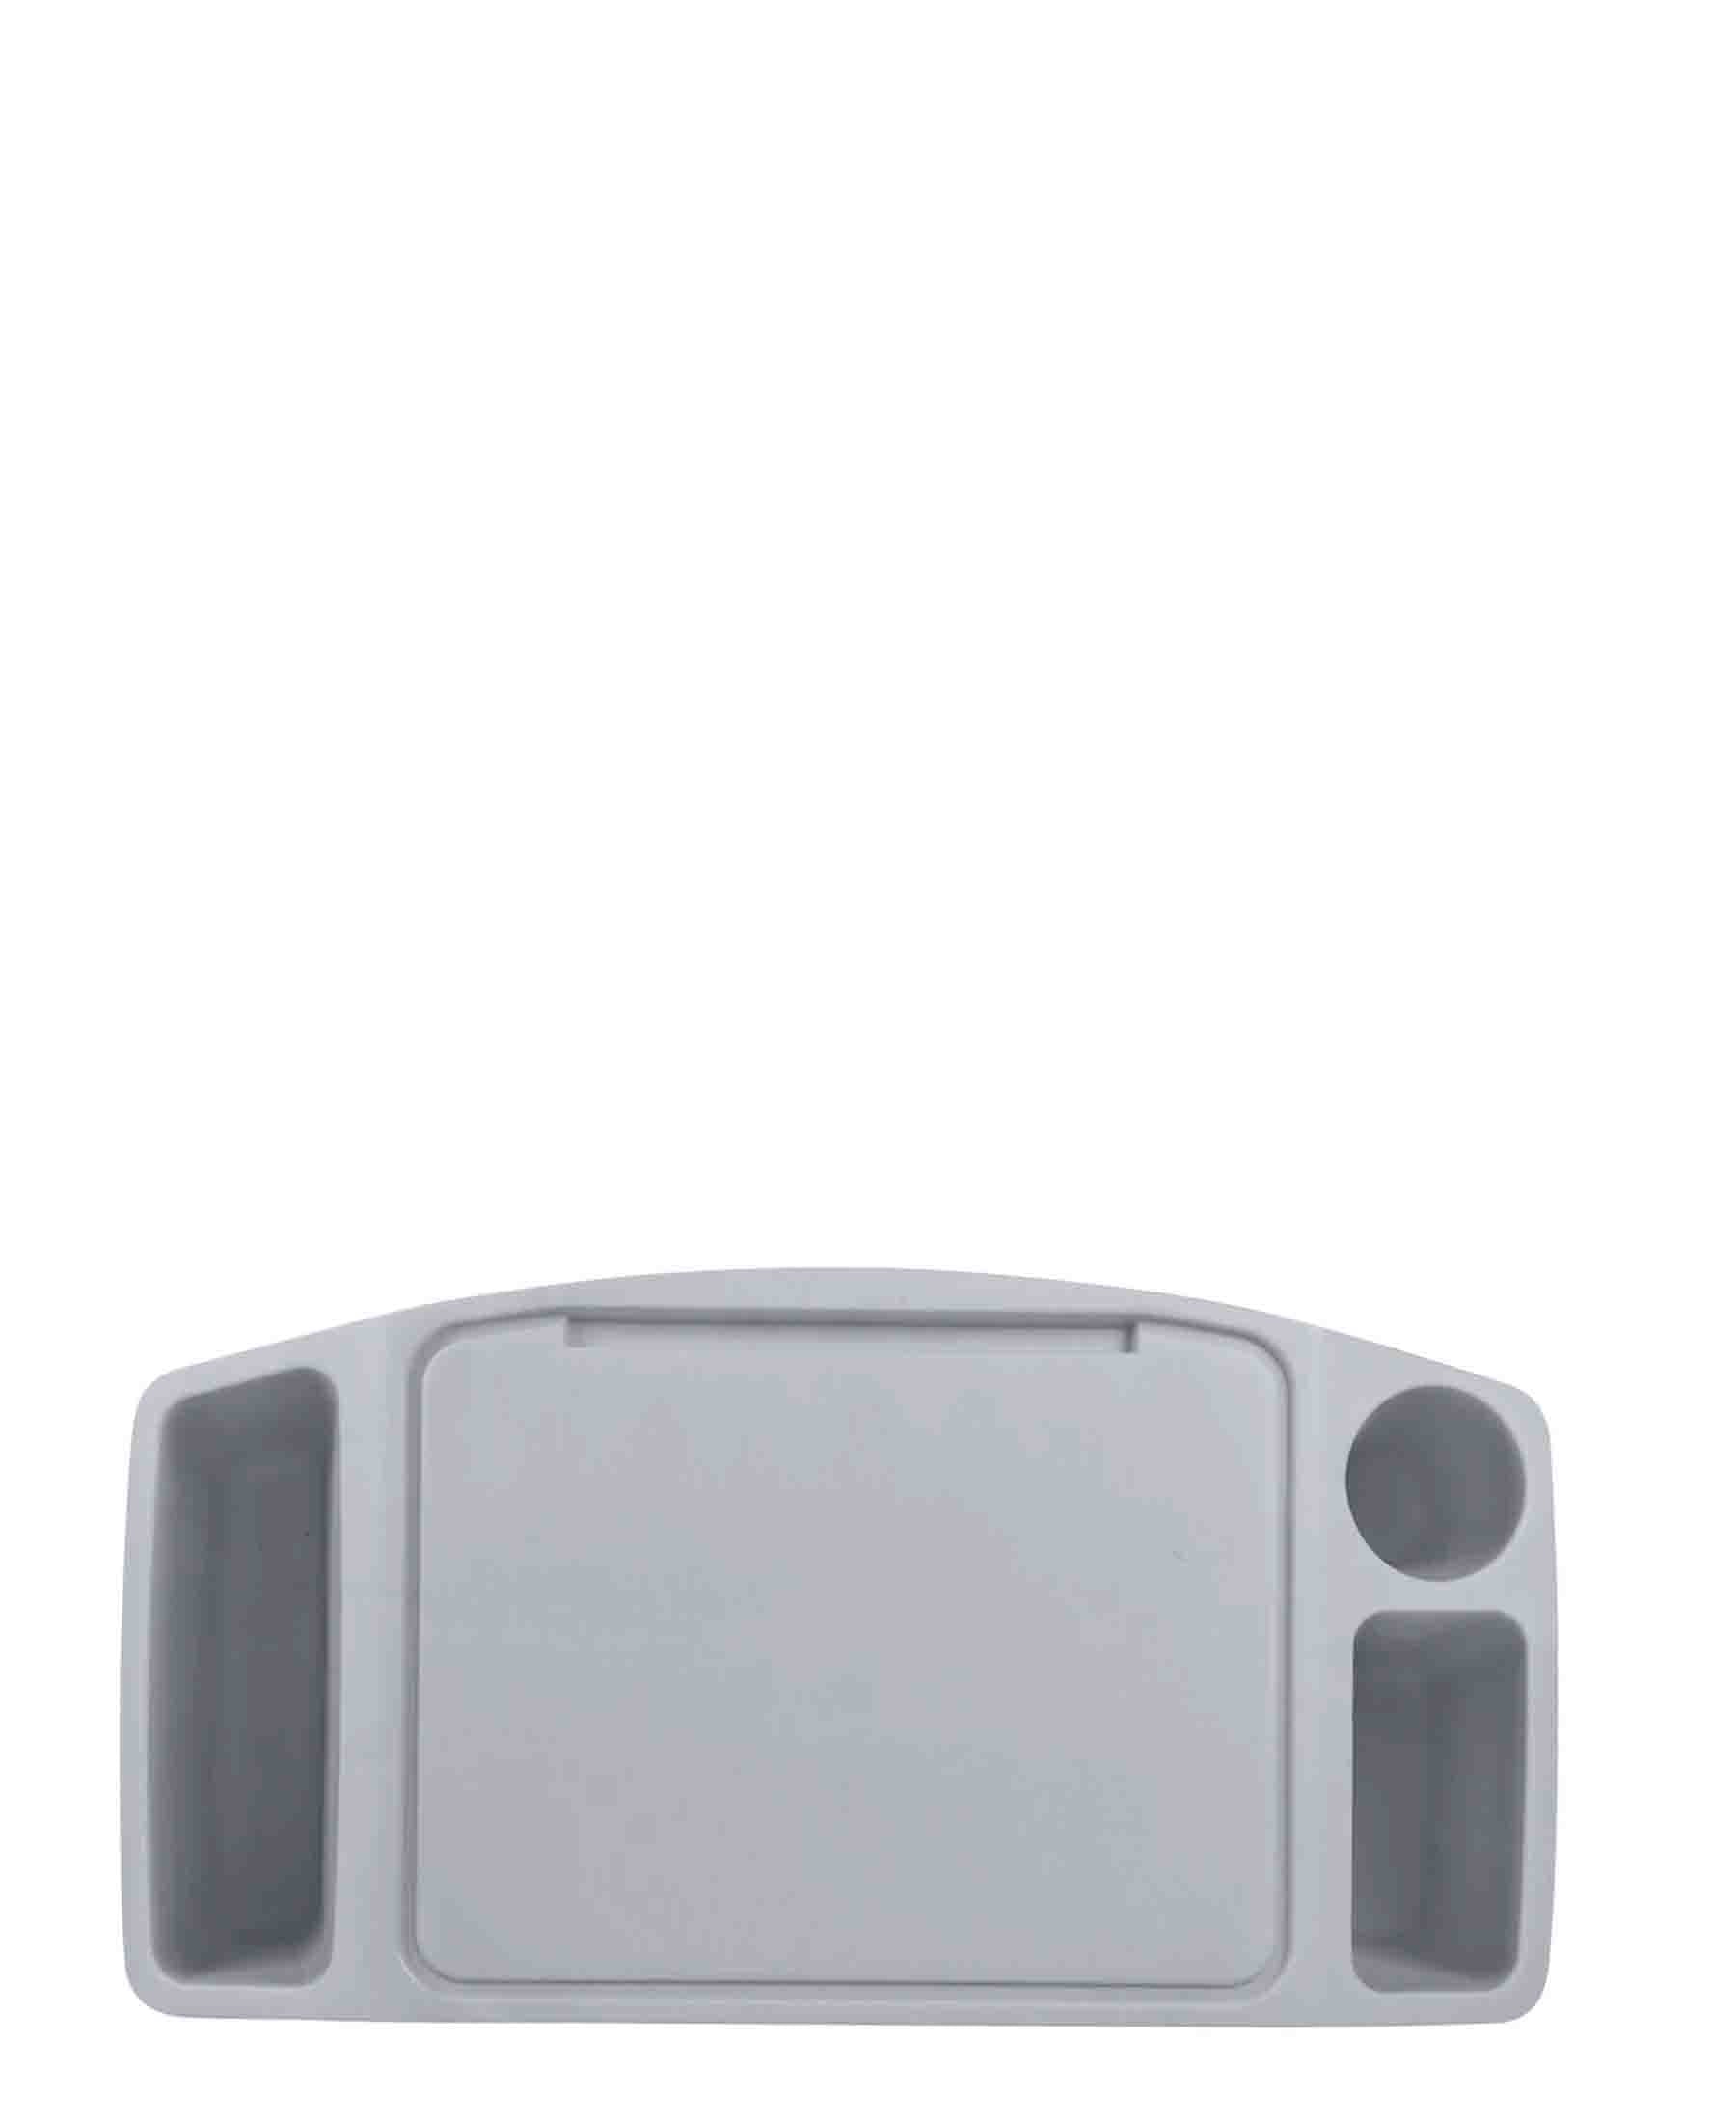 Portable Multi Purpose Tray & Drink Holder - Grey